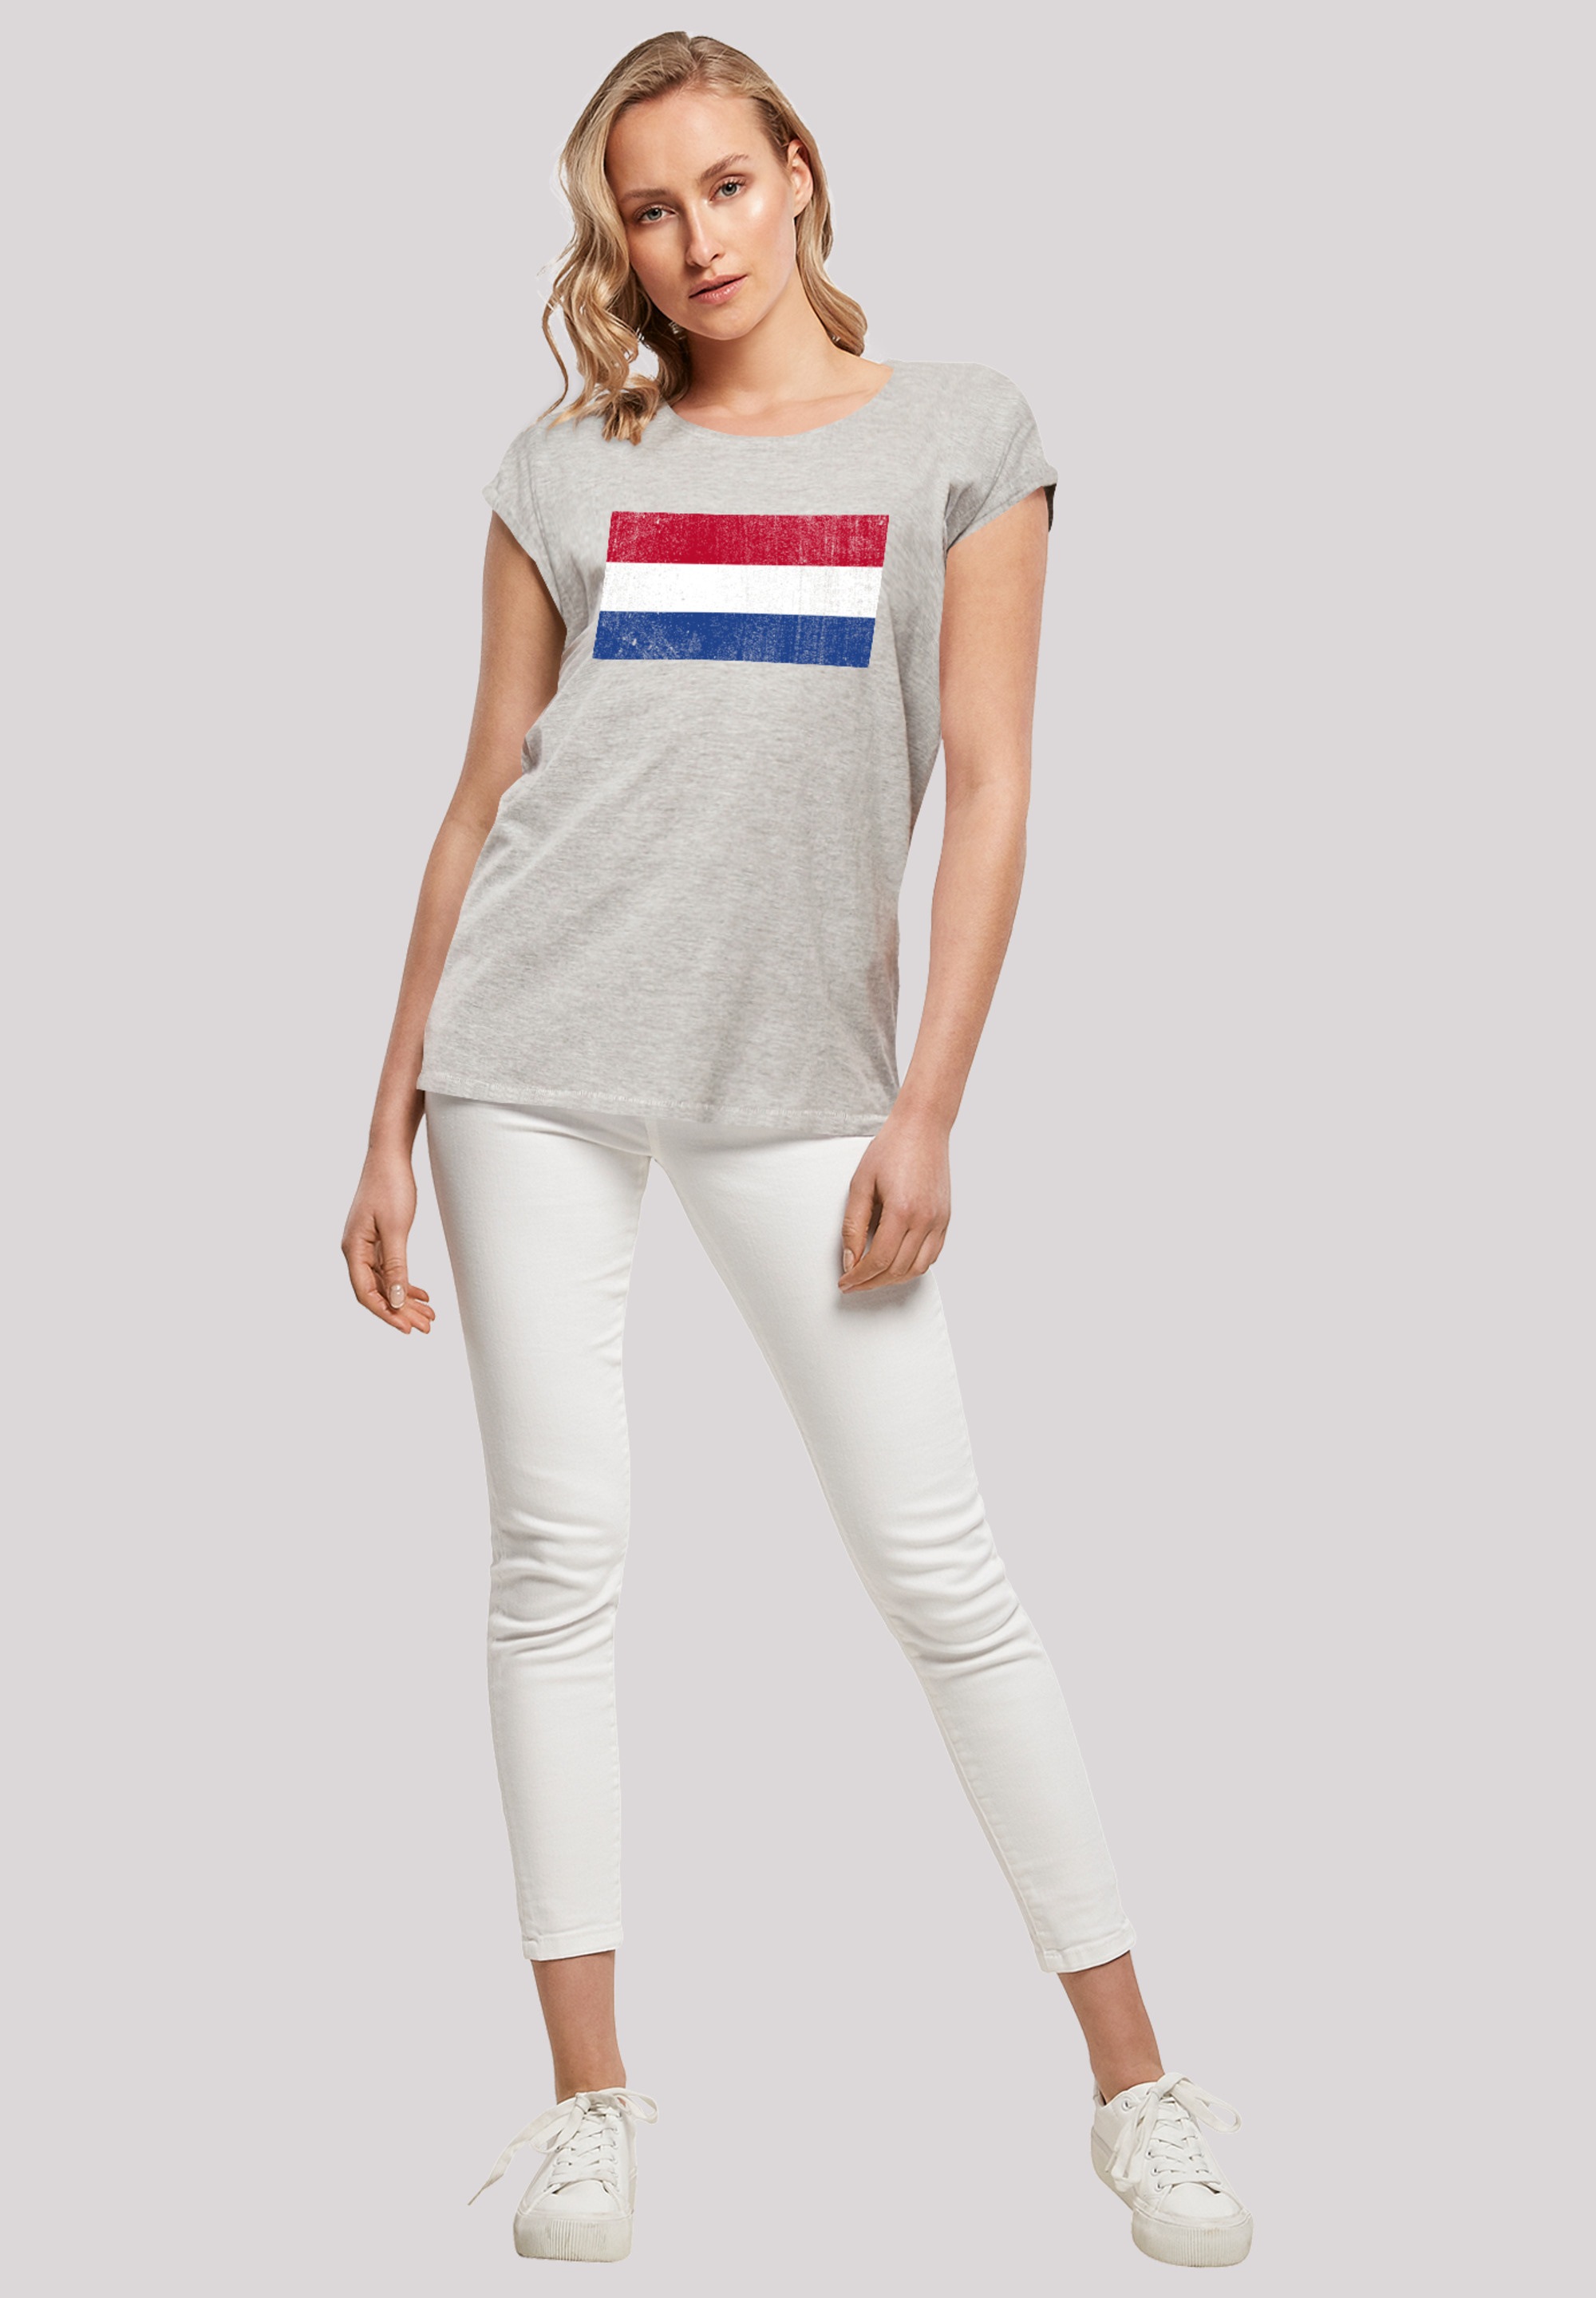 kaufen »Netherlands Holland distressed«, Flagge NIederlande T-Shirt F4NT4STIC Print